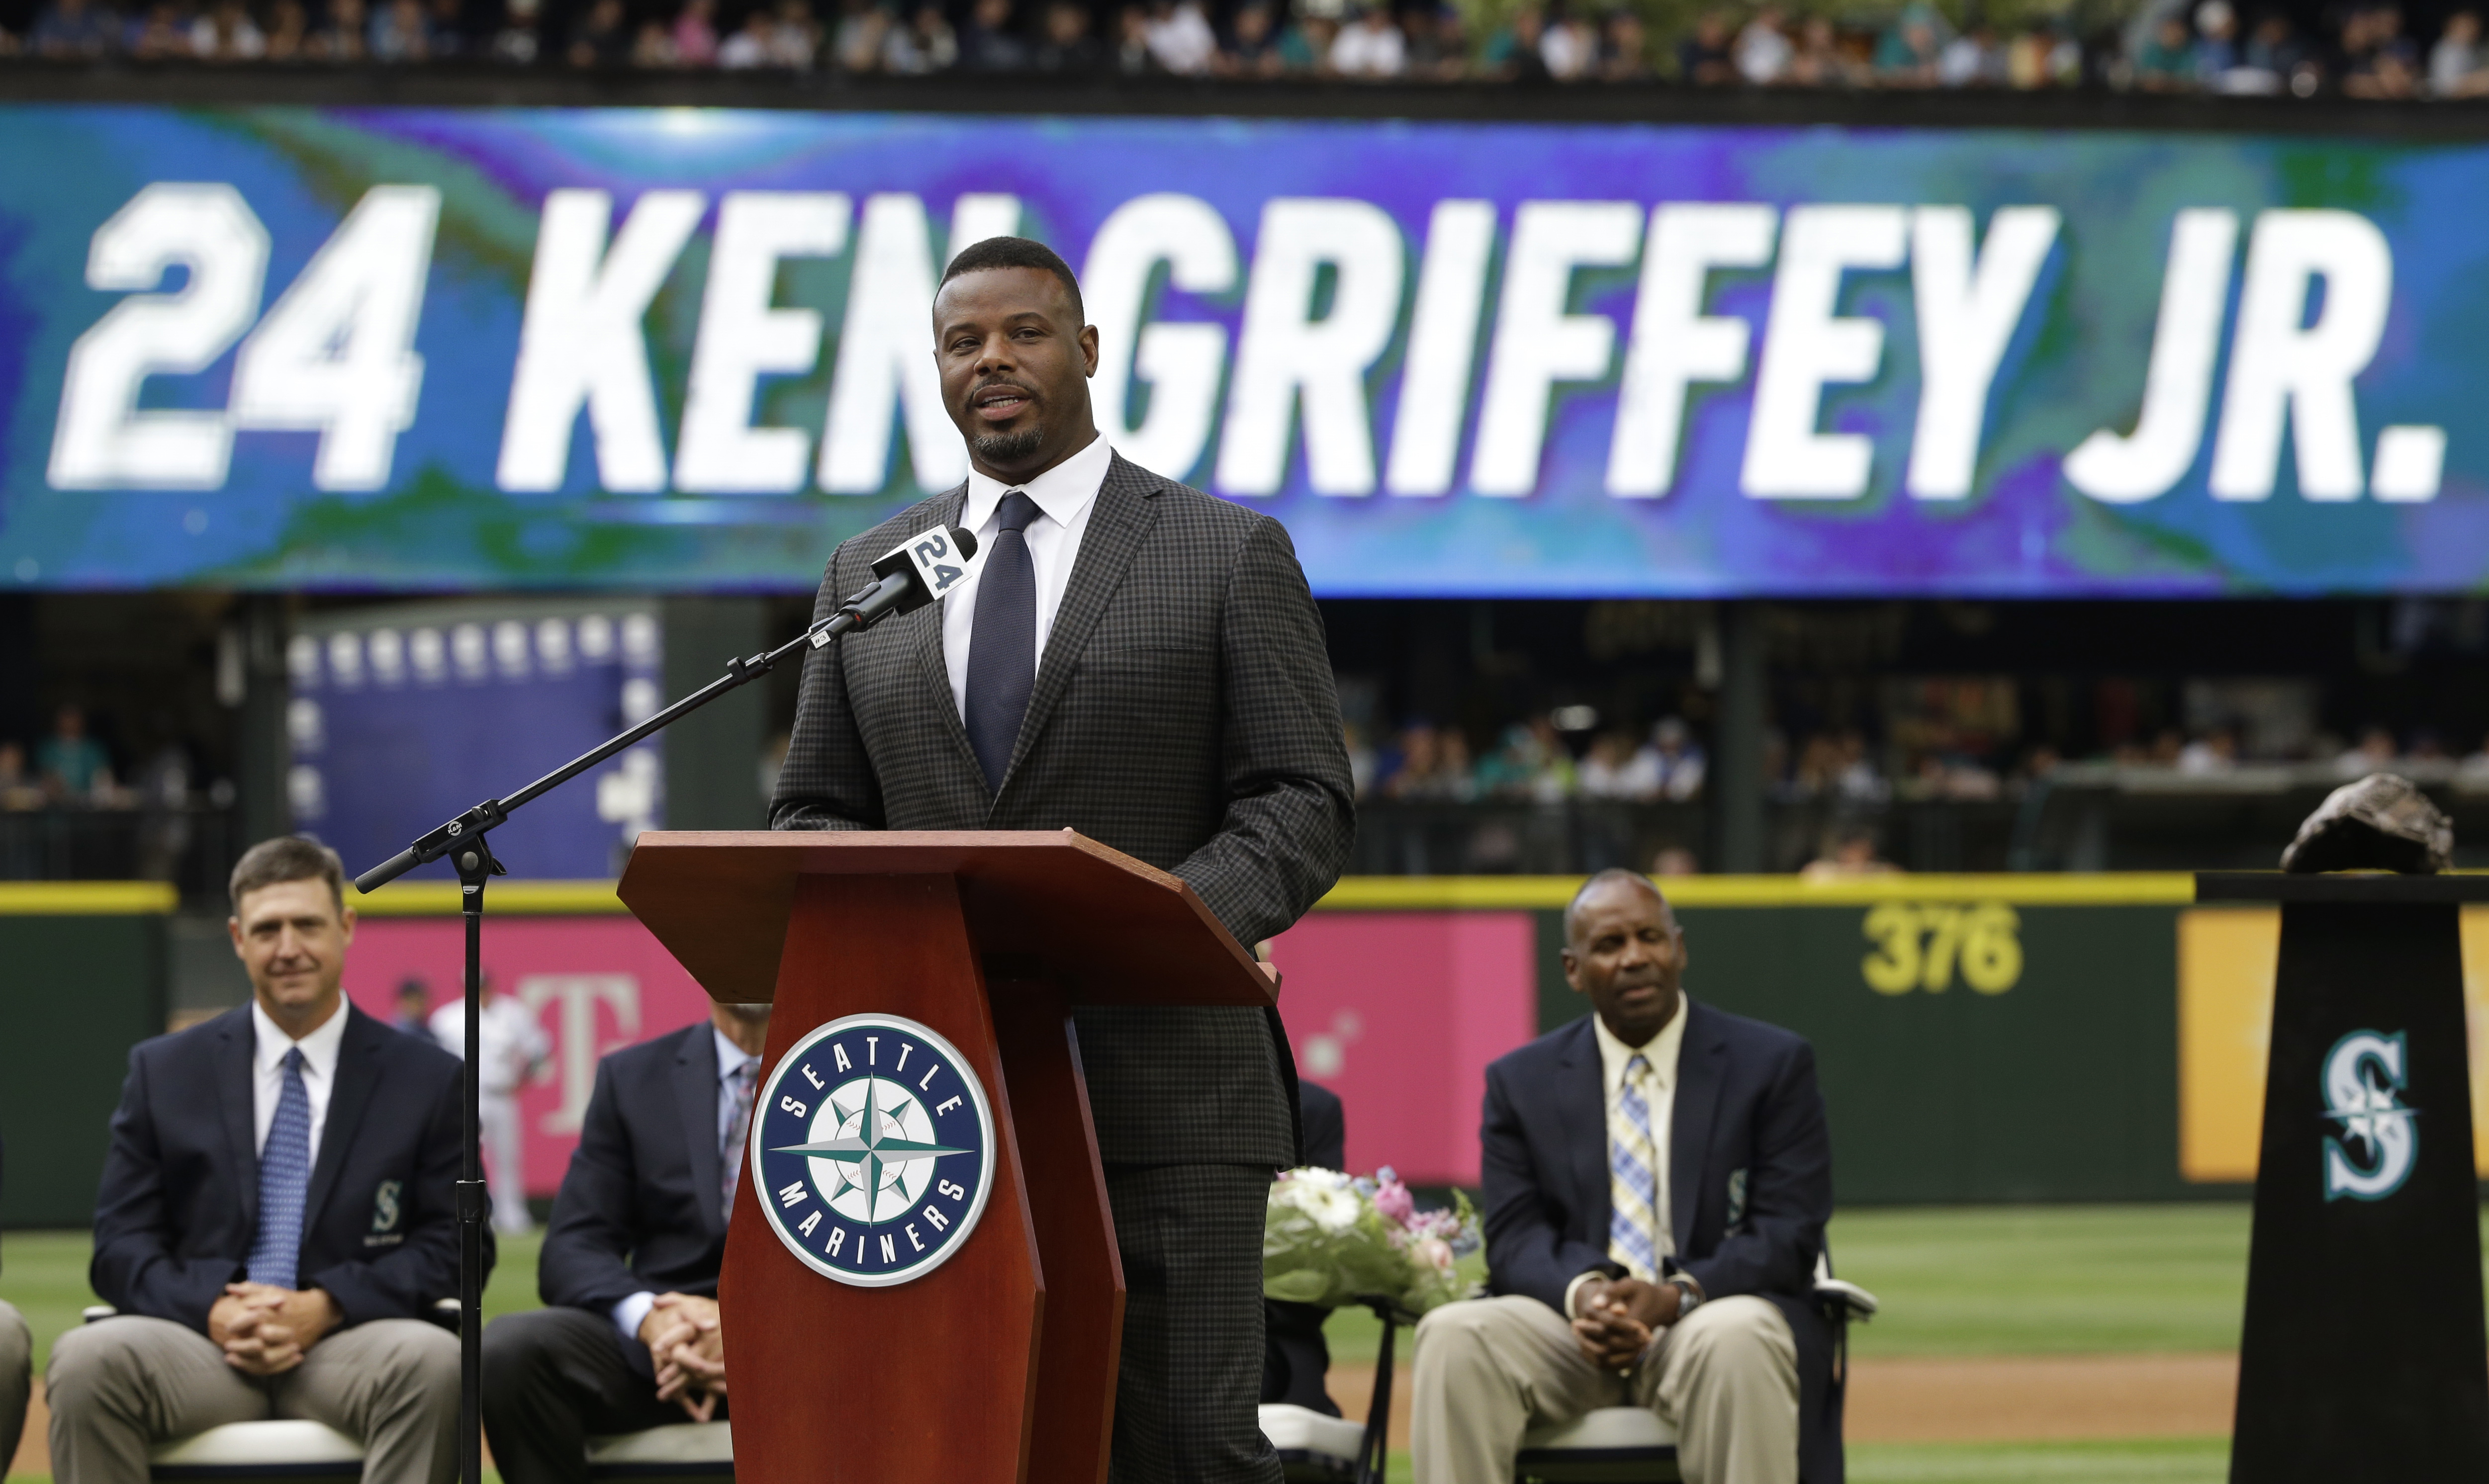 MLB legend Ken Griffey Jr. joins Mariners ownership group